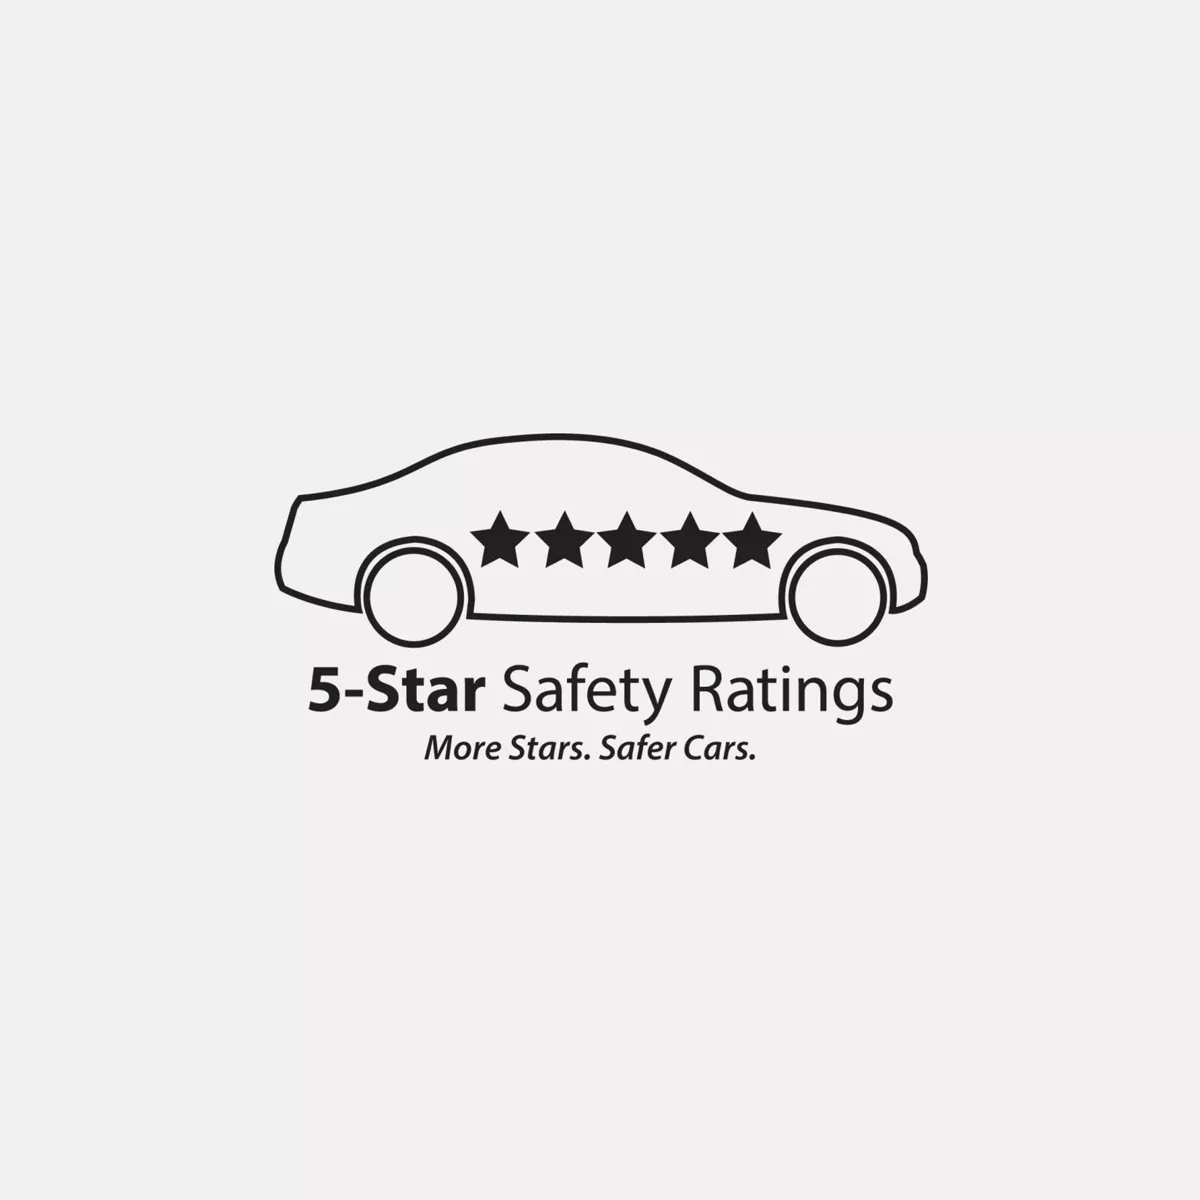 5 star safety ratings more stars safer cars.